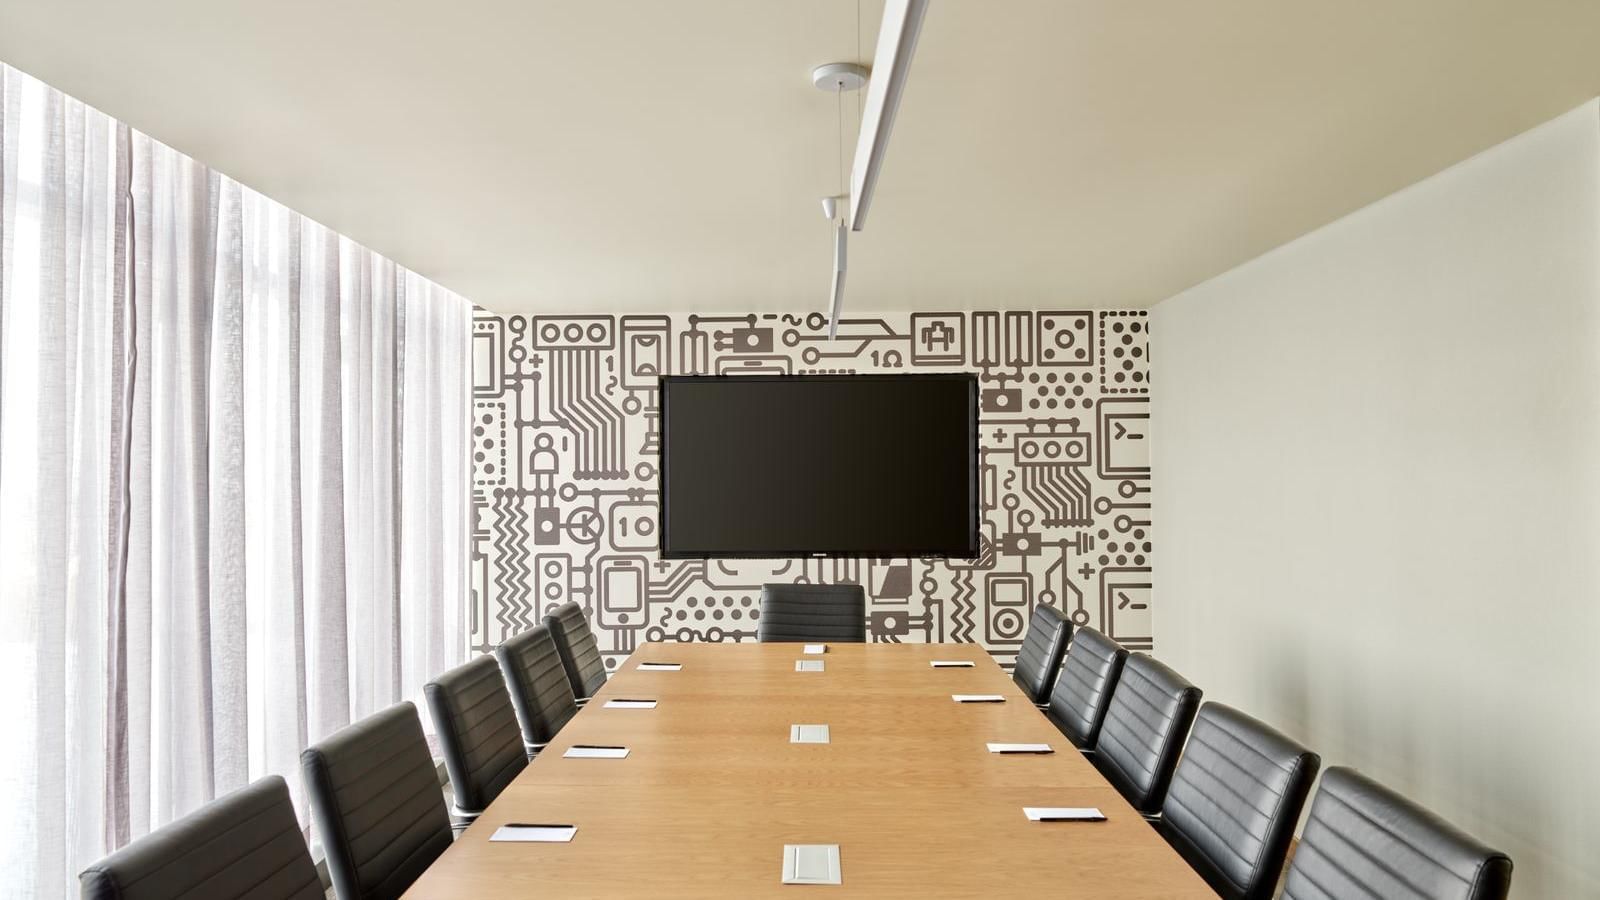 Executive meeting room arrangement at FA Viaducto Aeropuerto